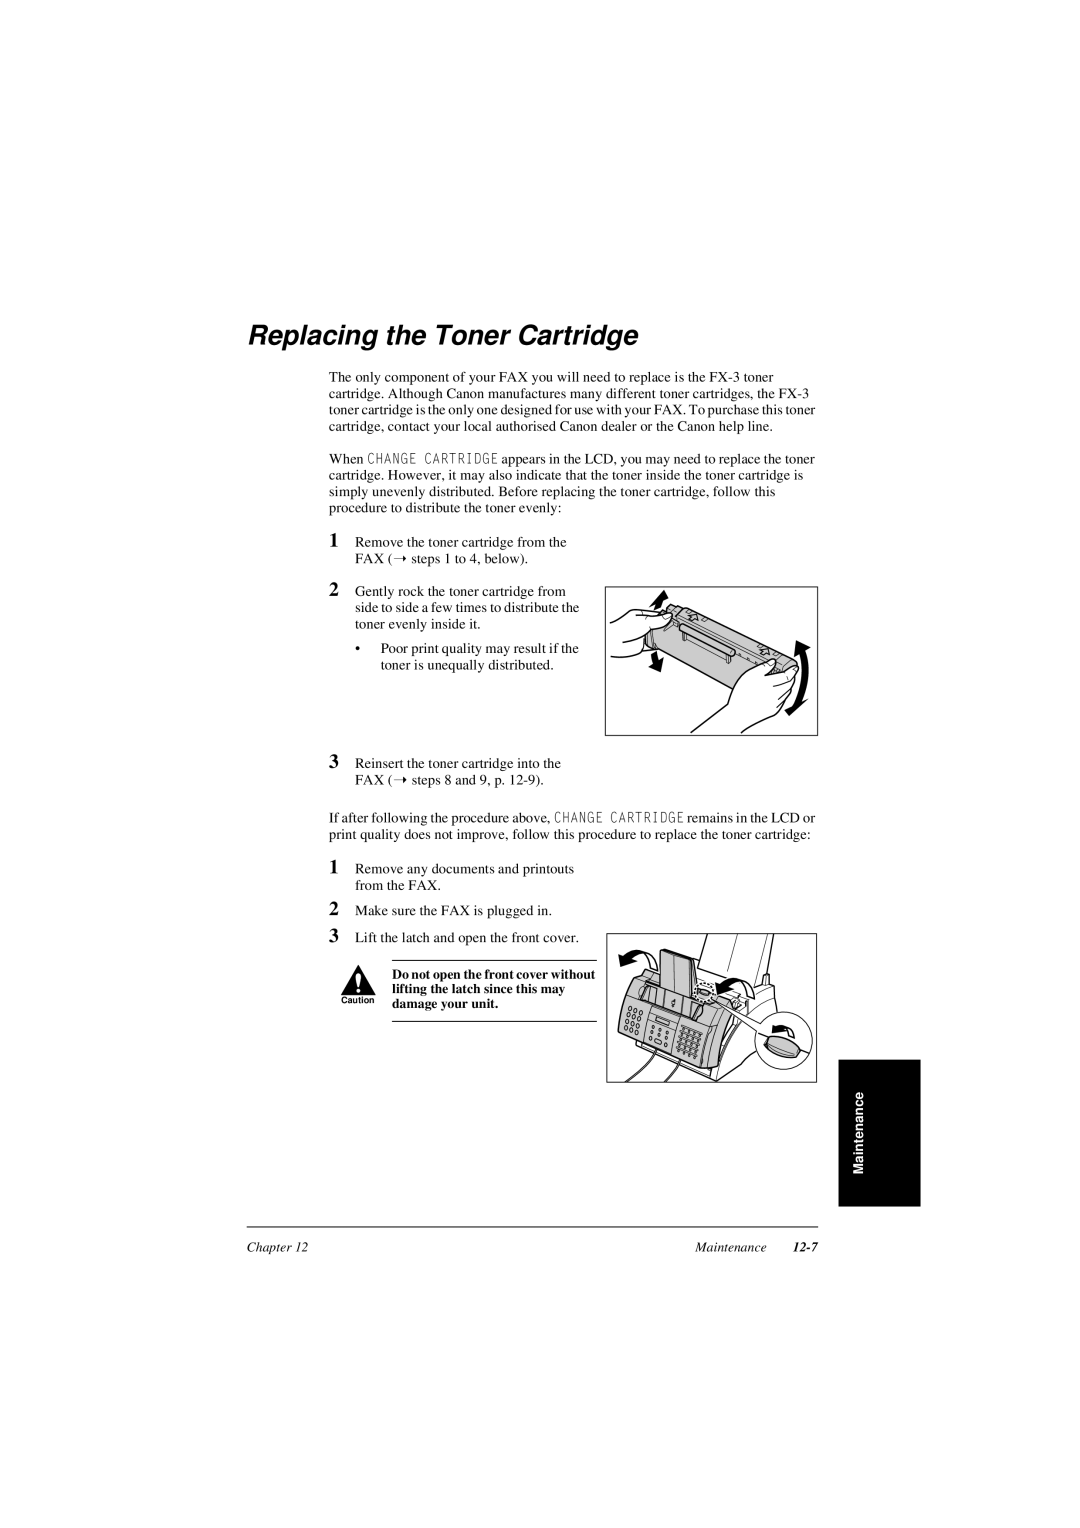 Canon L240, L290 manual Replacing the Toner Cartridge, Maintenance, Chapter, 12-7 